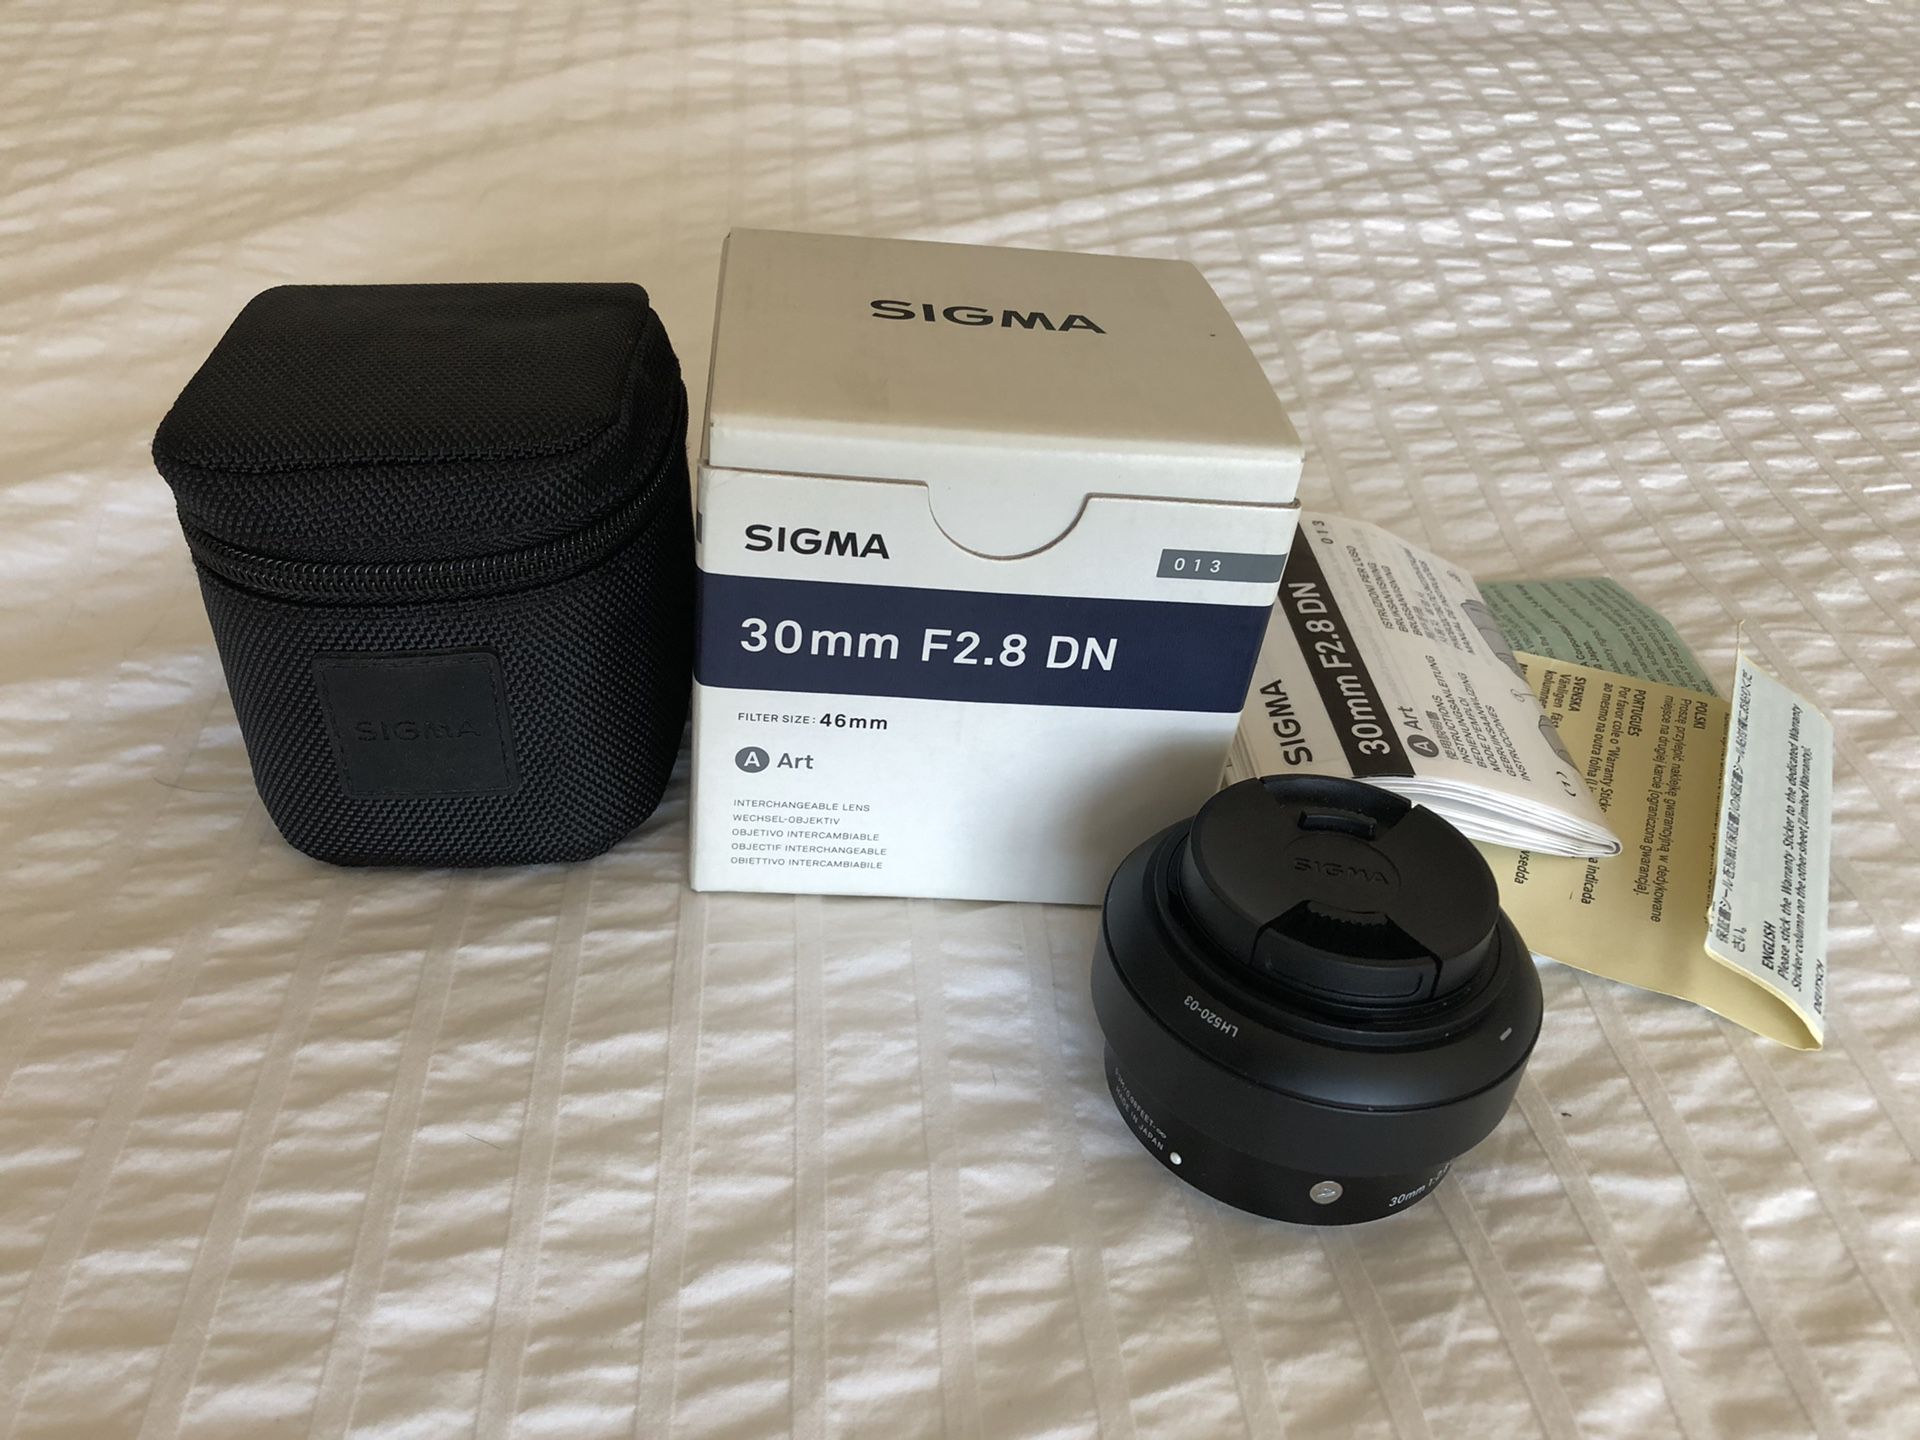 Sony E Mount Sigma 30mm f2.8 DN Art Lens